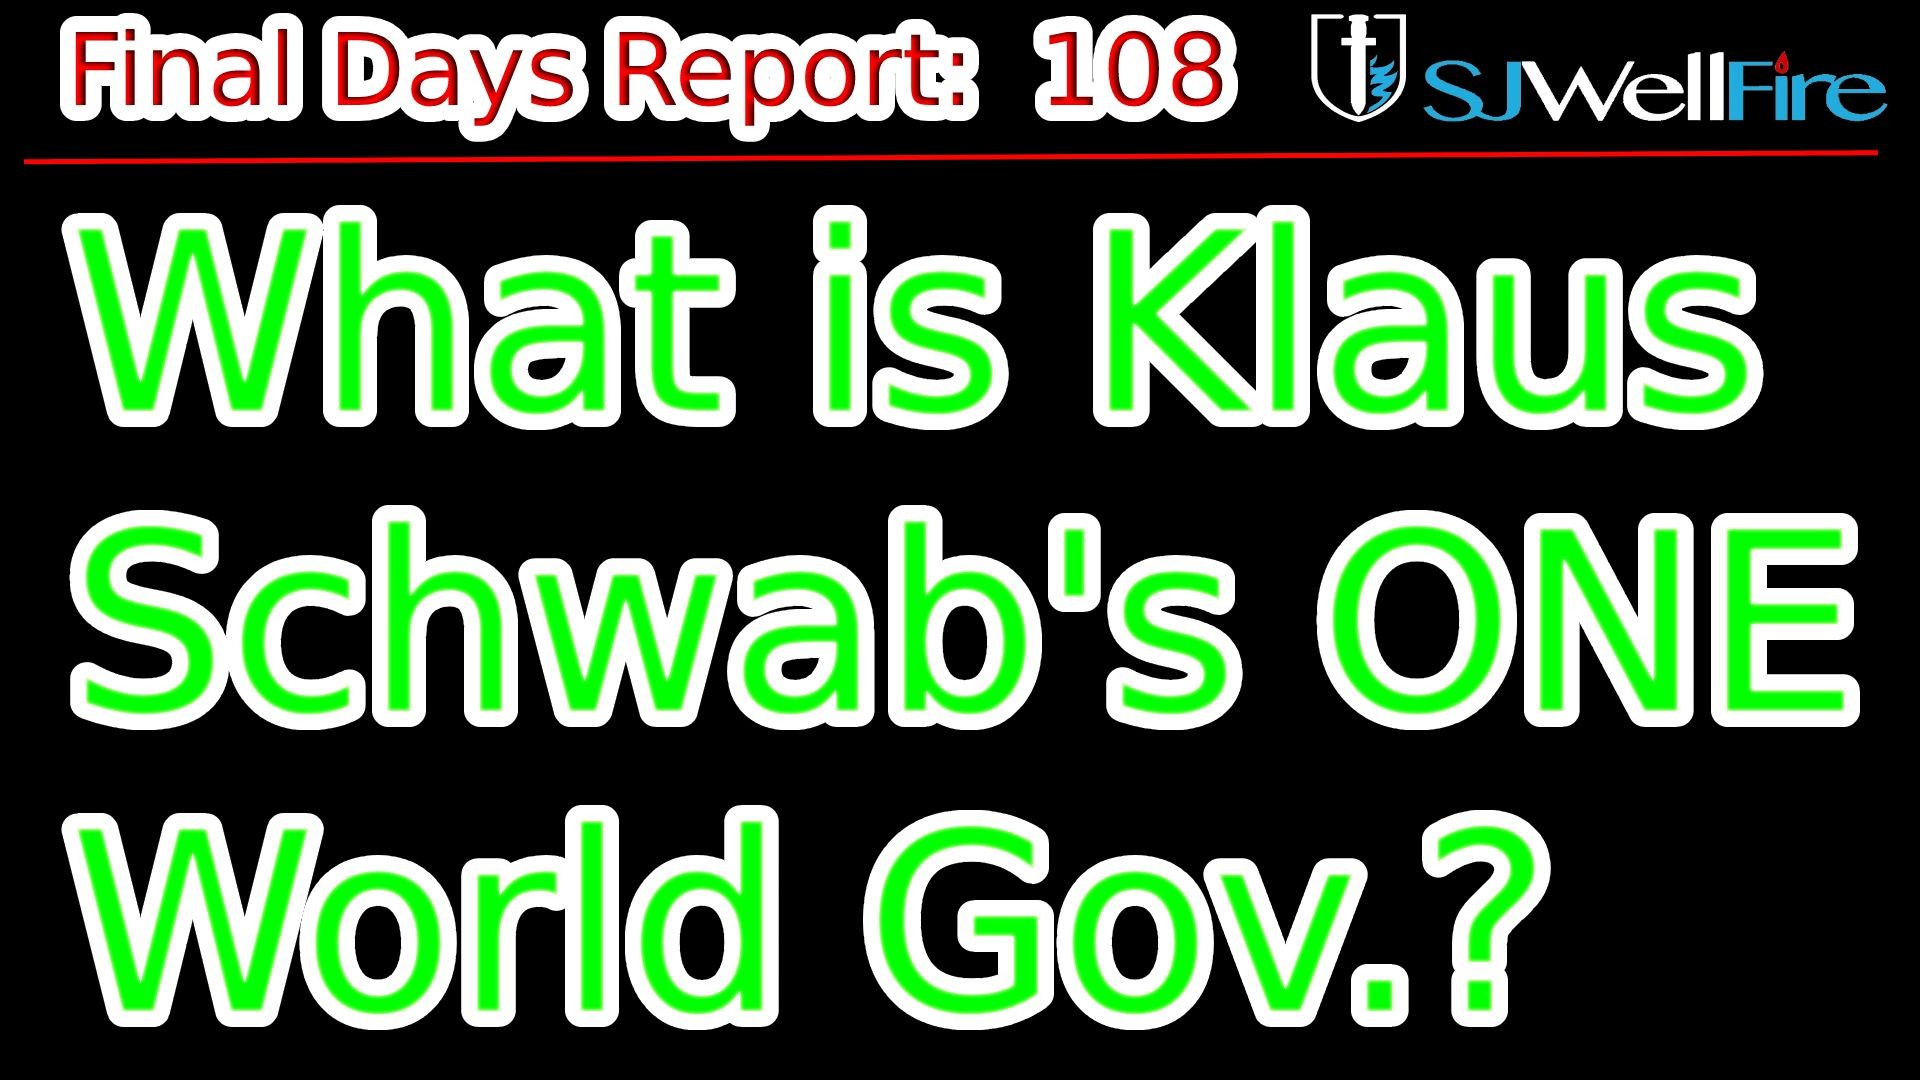 One World Gov Klaus Schwab's Vision 8 Years Ago